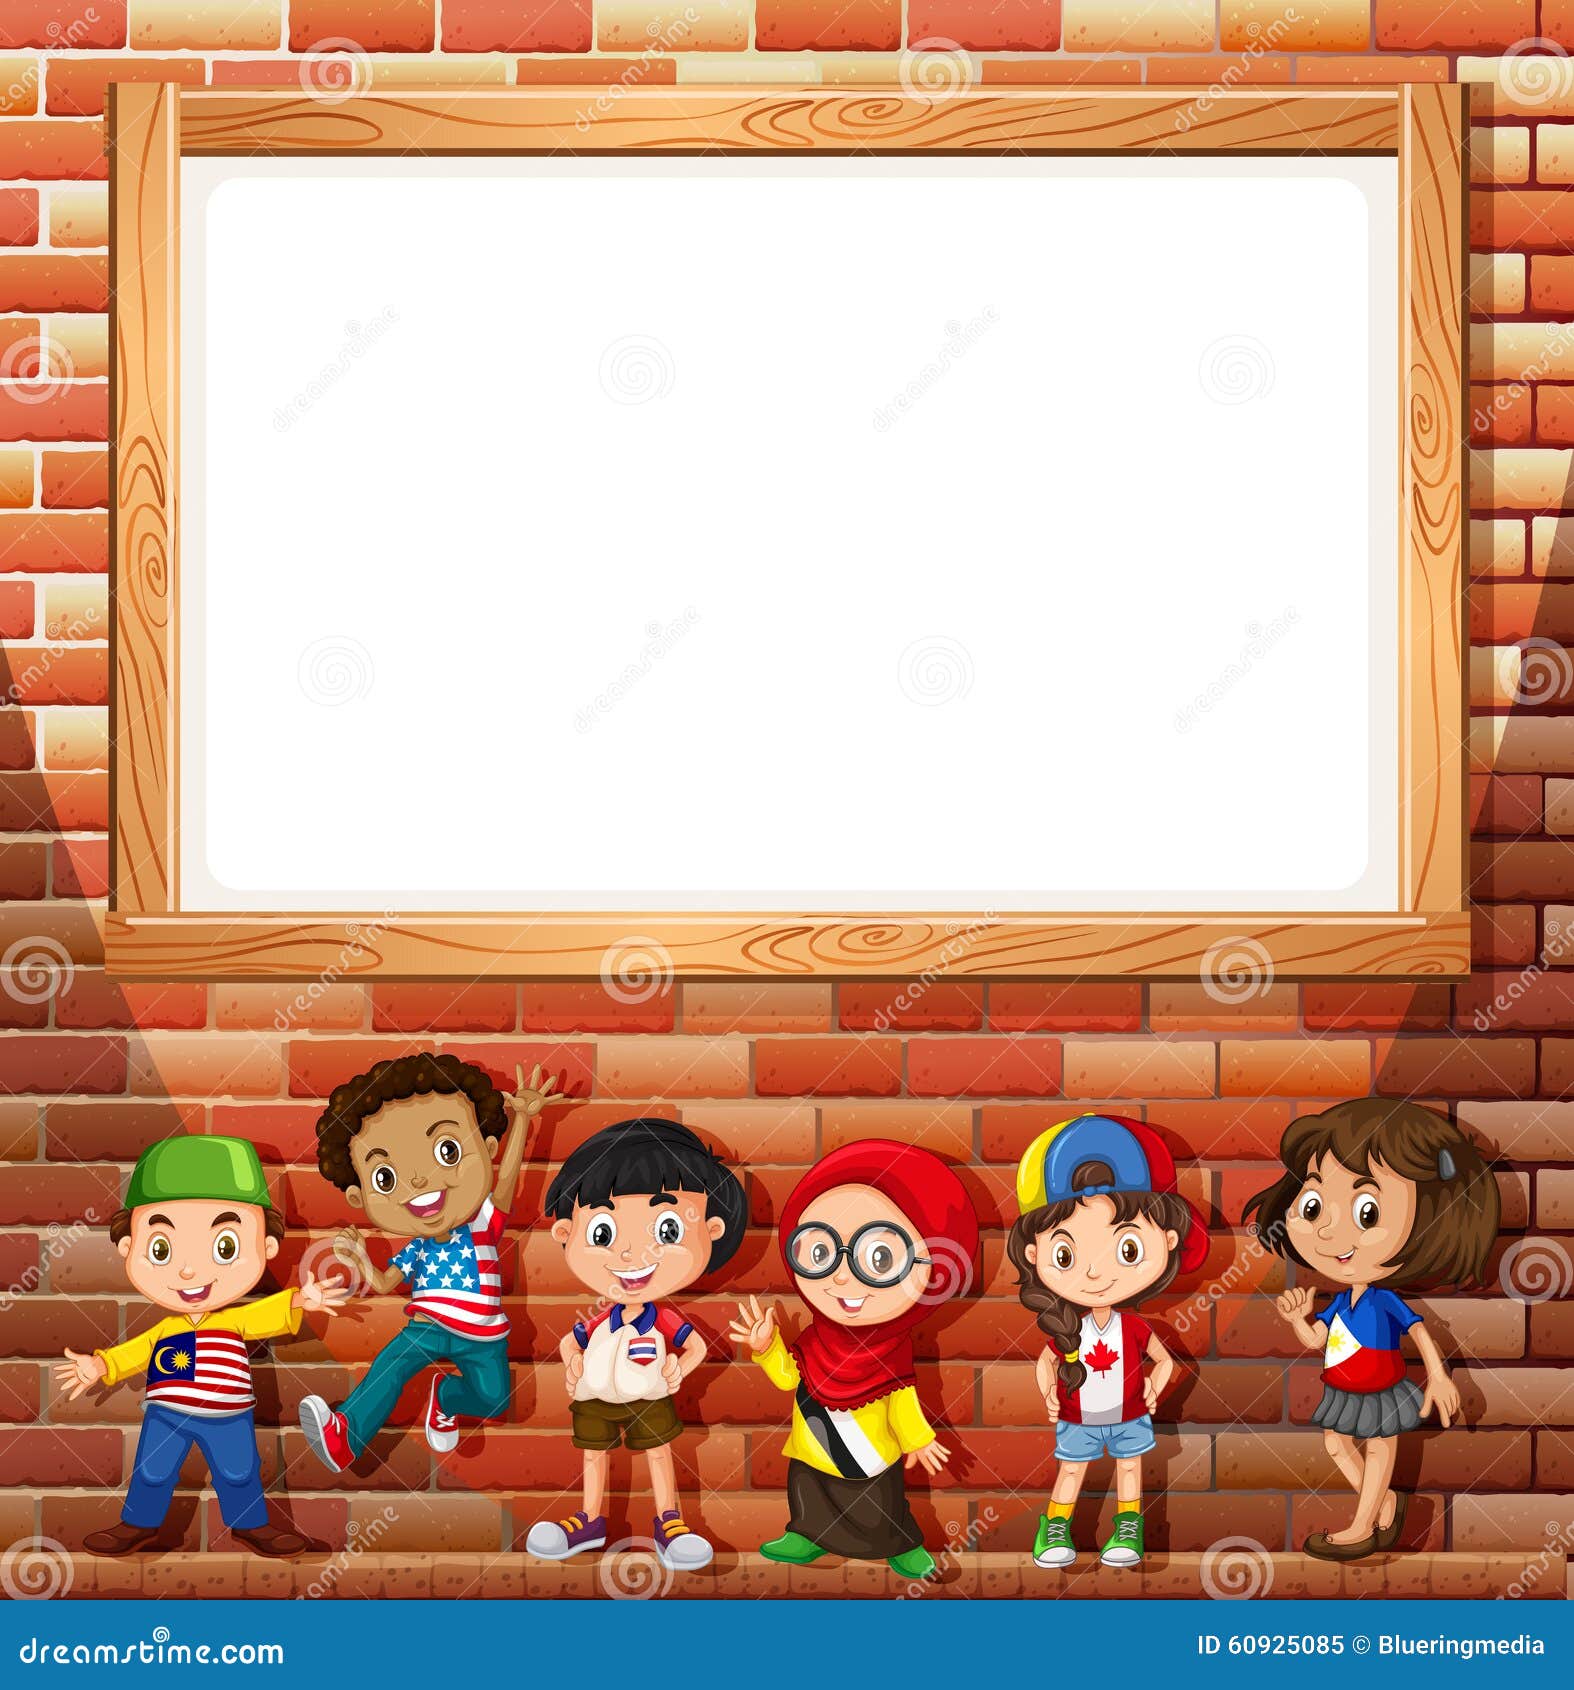 Border Design with Many Children Stock Vector - Illustration of school,  cartoon: 60925085